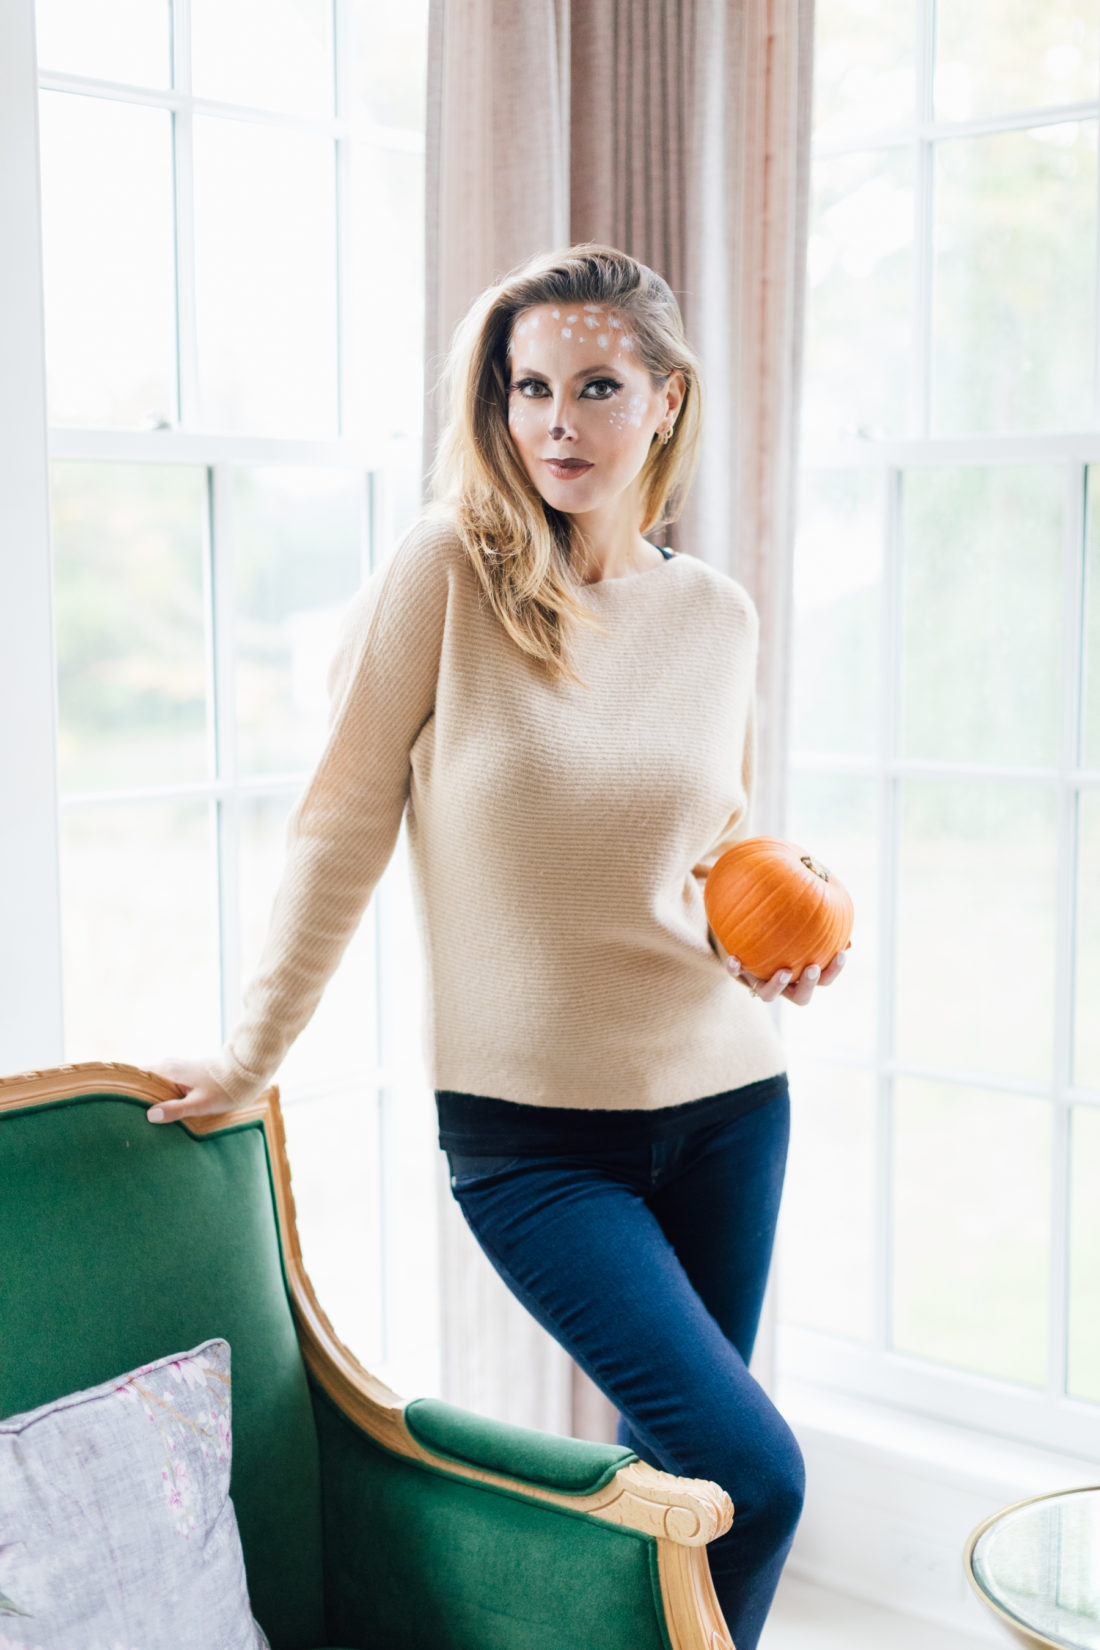 Eva Amurri Martino shares two easy Halloween makeup tutorials